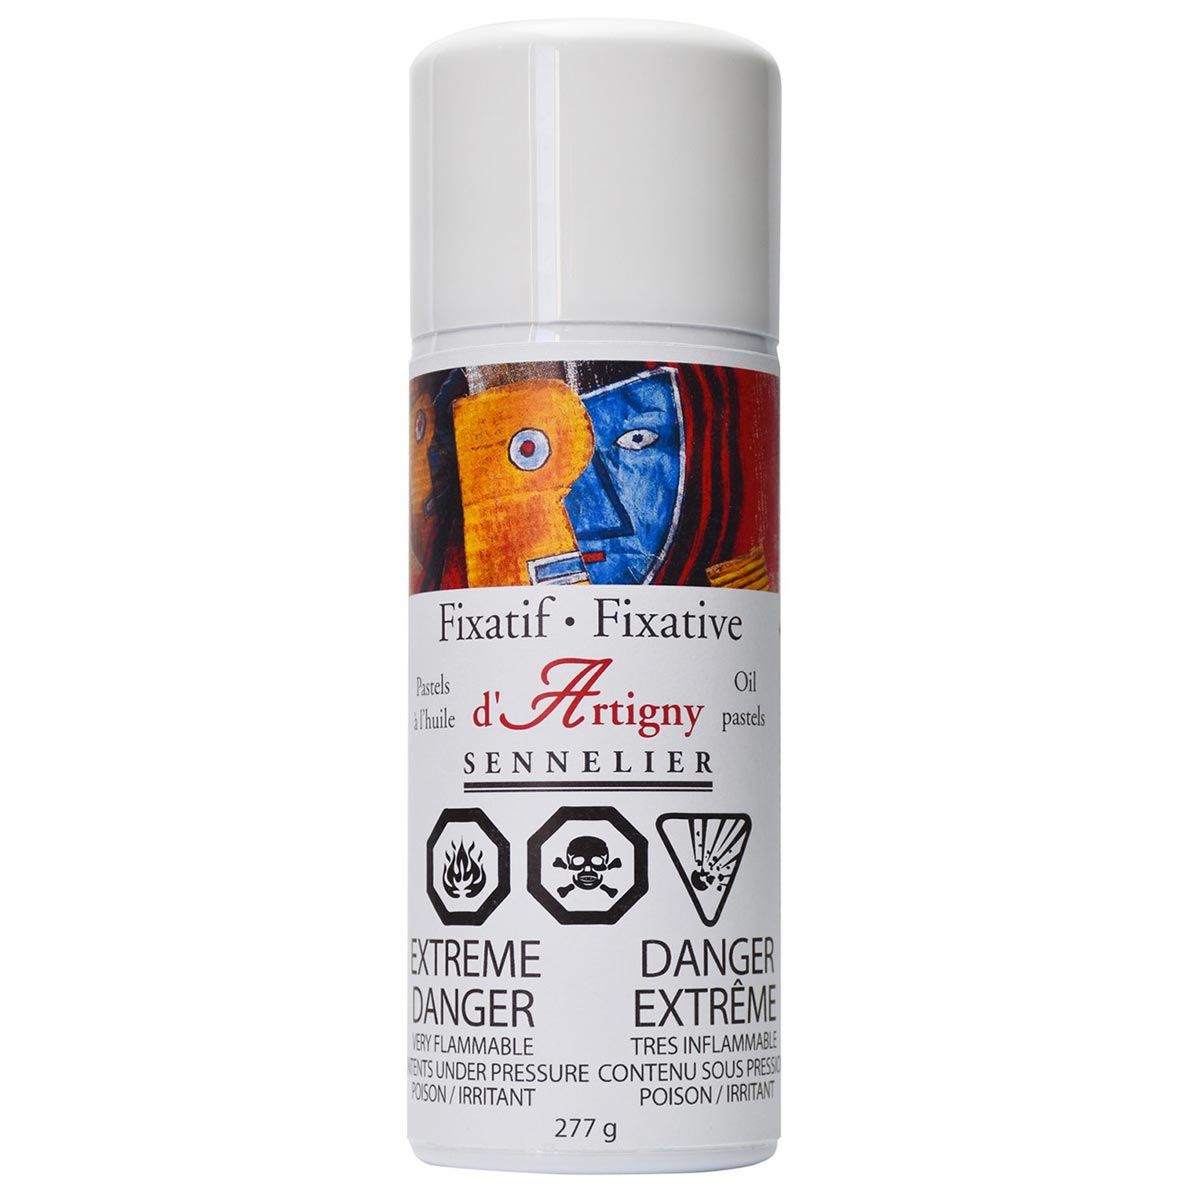 Sennelier D'Artigny Oil Pastel Spray Fixative 290g